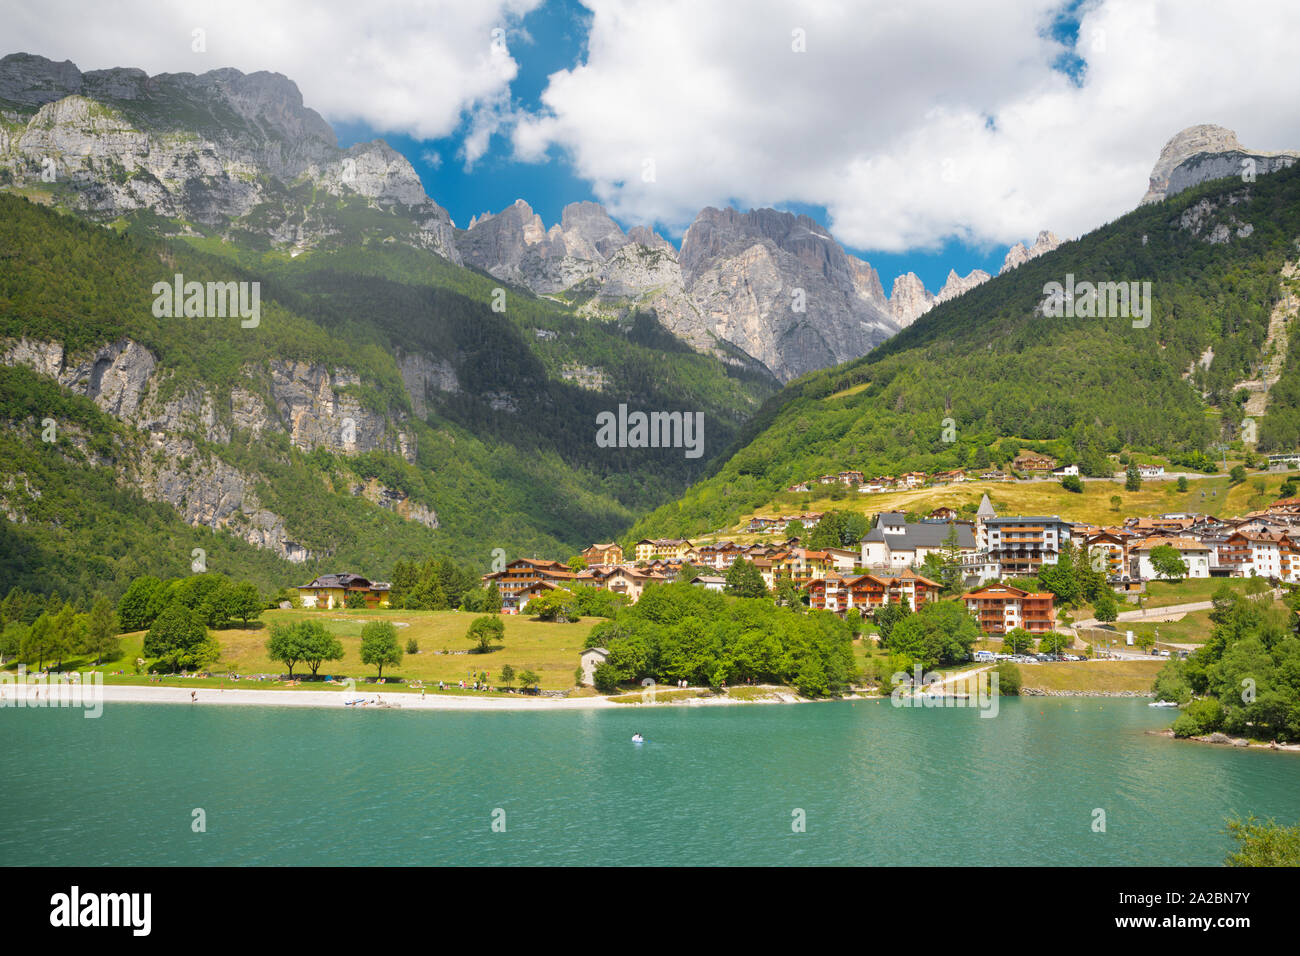 The Alps lake Lago di Molveno with the Brenta dolomites in the background. Stock Photo